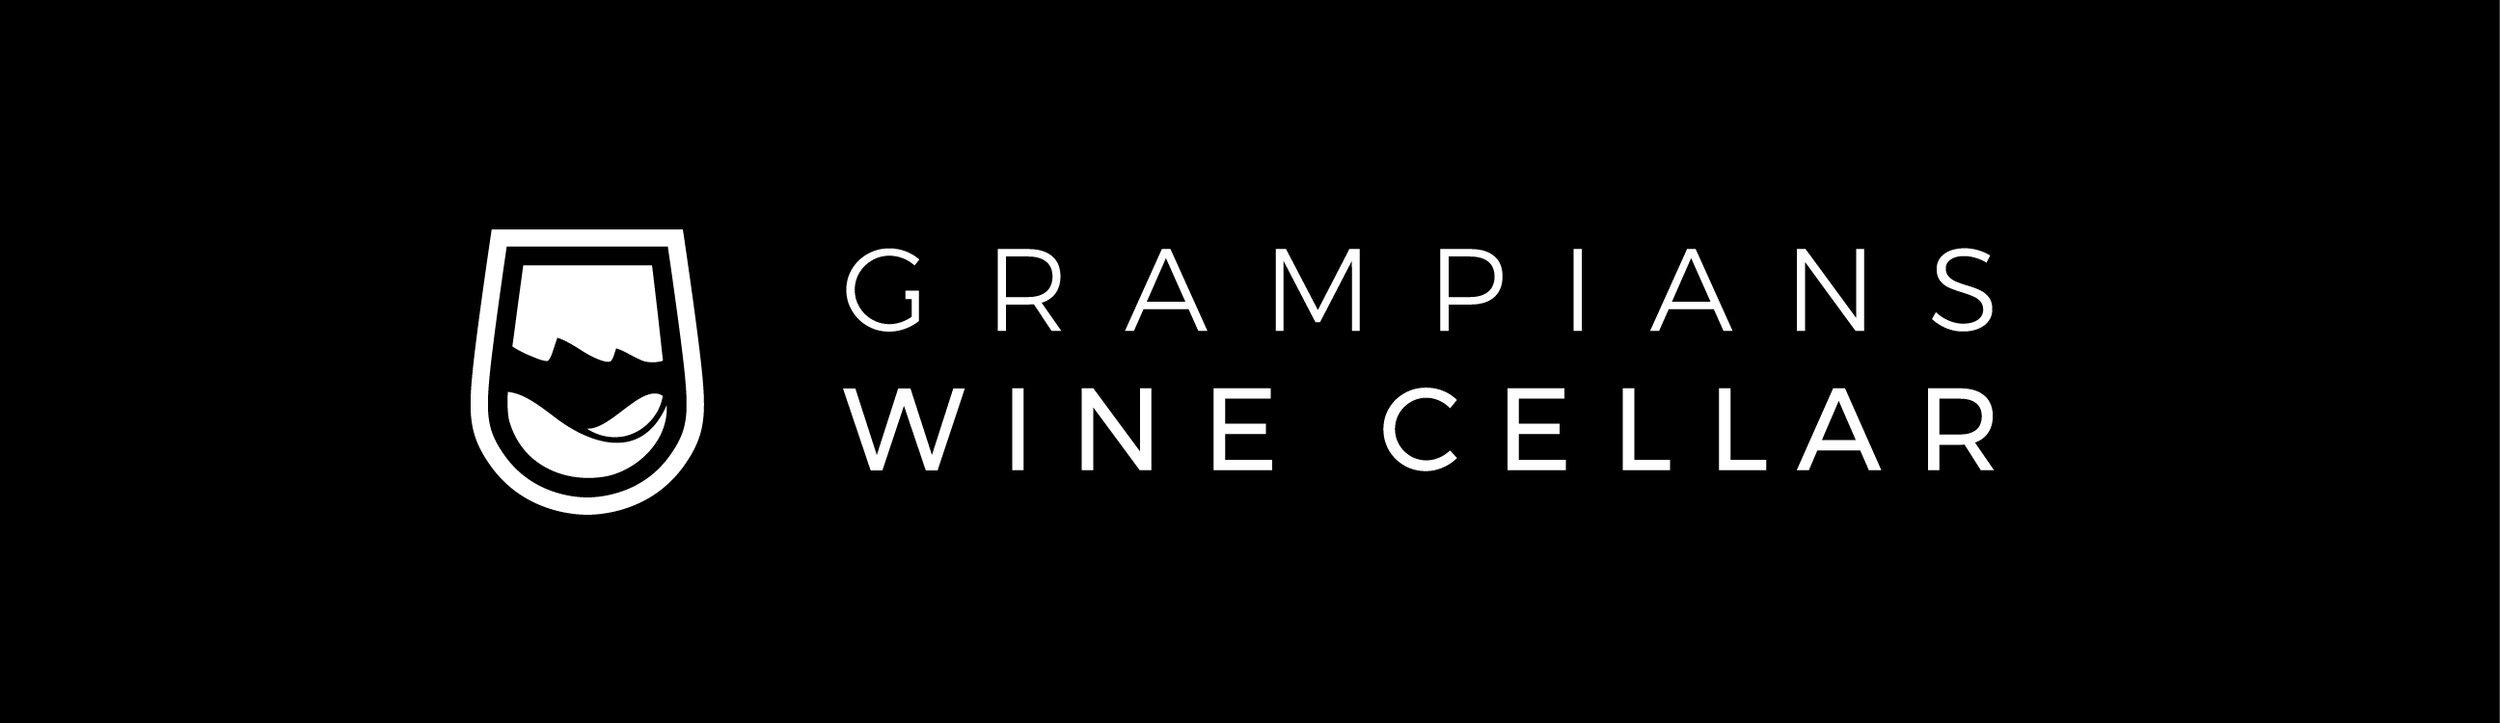 Grampians Wine Cellar